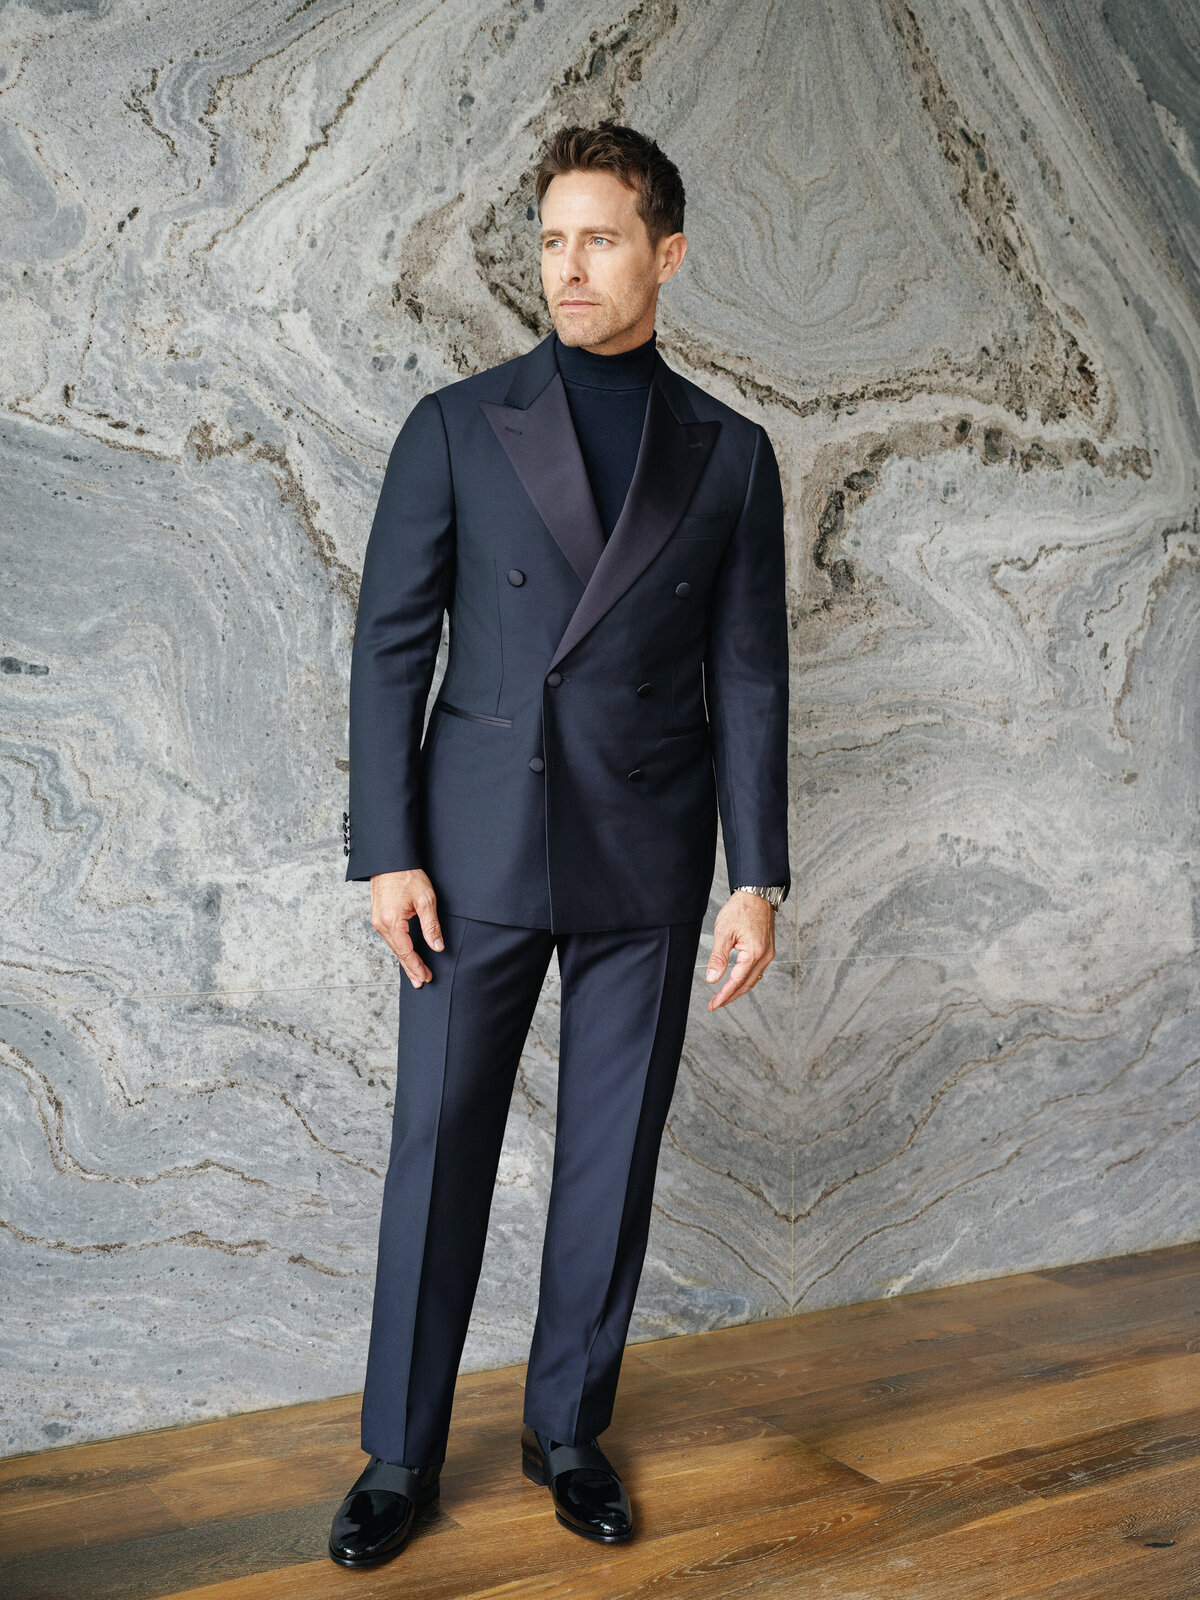 men’s-style-classic-fashion-navy-tuxedo-personal-shopping-fashion-stylist-raina-silberstein